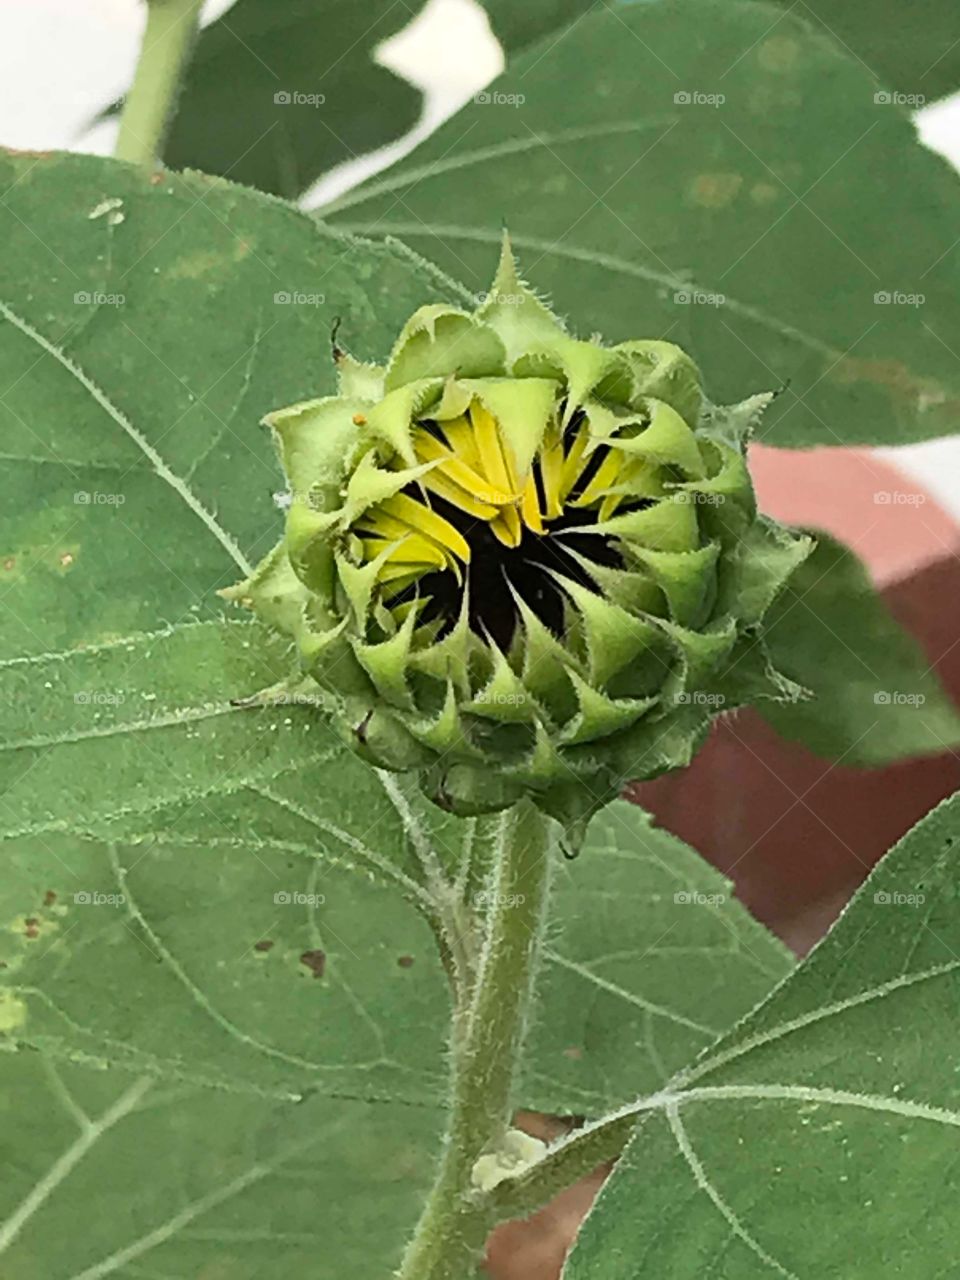 Sunflower Bud Starting to Open